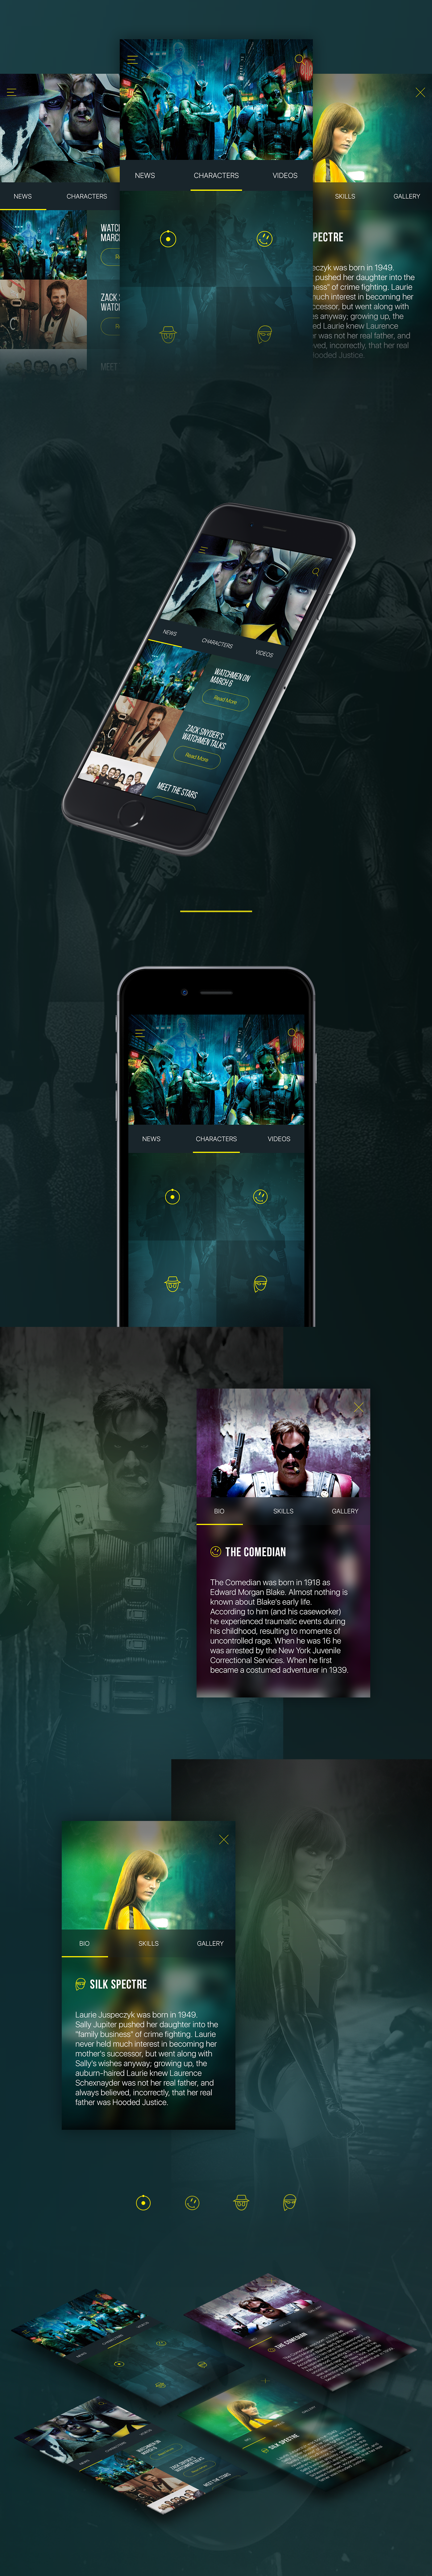 mobile television WatchMen app dccomics ios Interface Movies UI ux superheroes